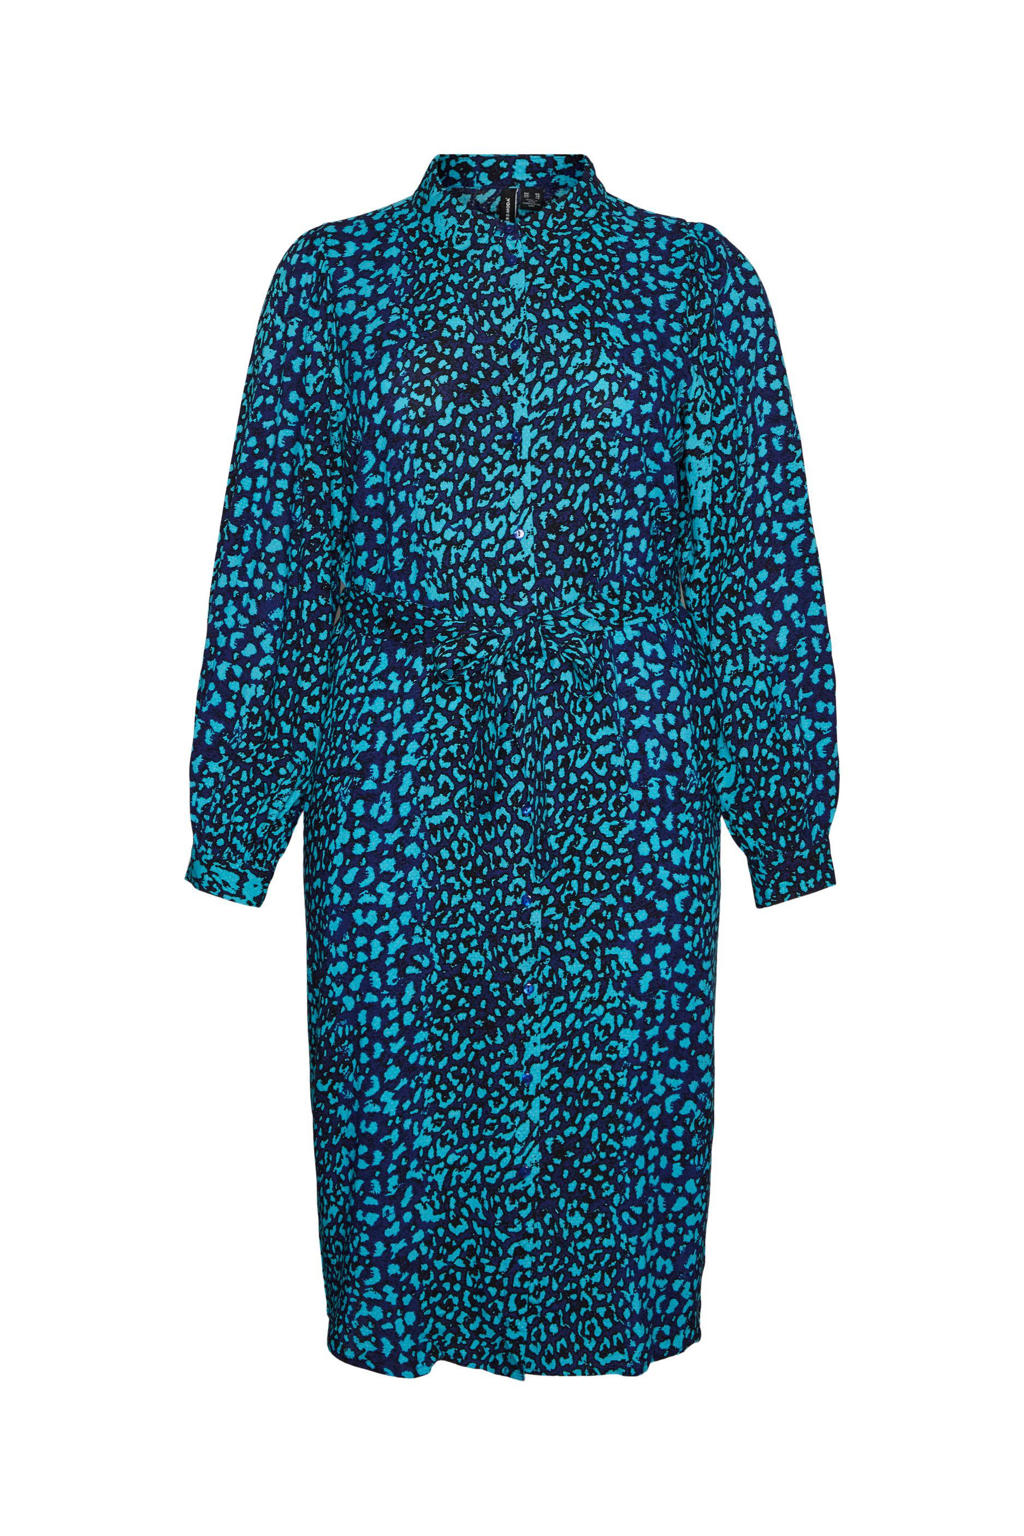 VERO MODA CURVE blousejurk met dierenprint turquoise